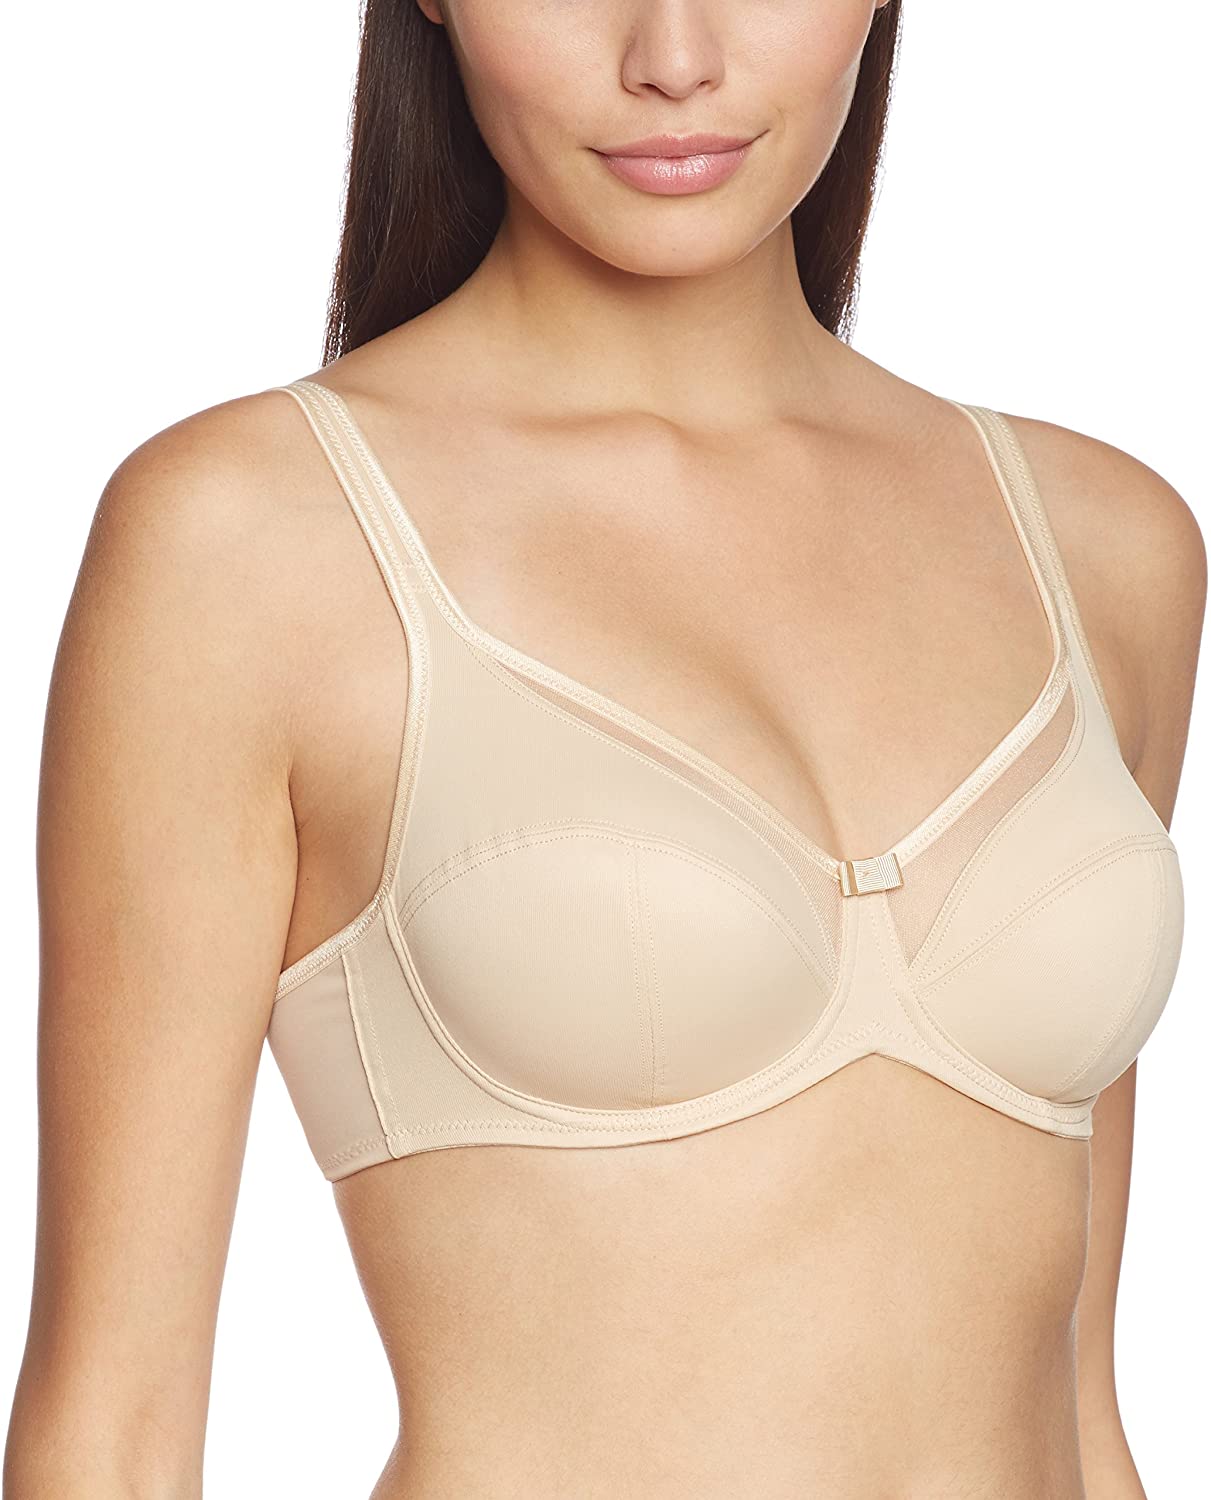 CLARA – Comfort bra with underwire